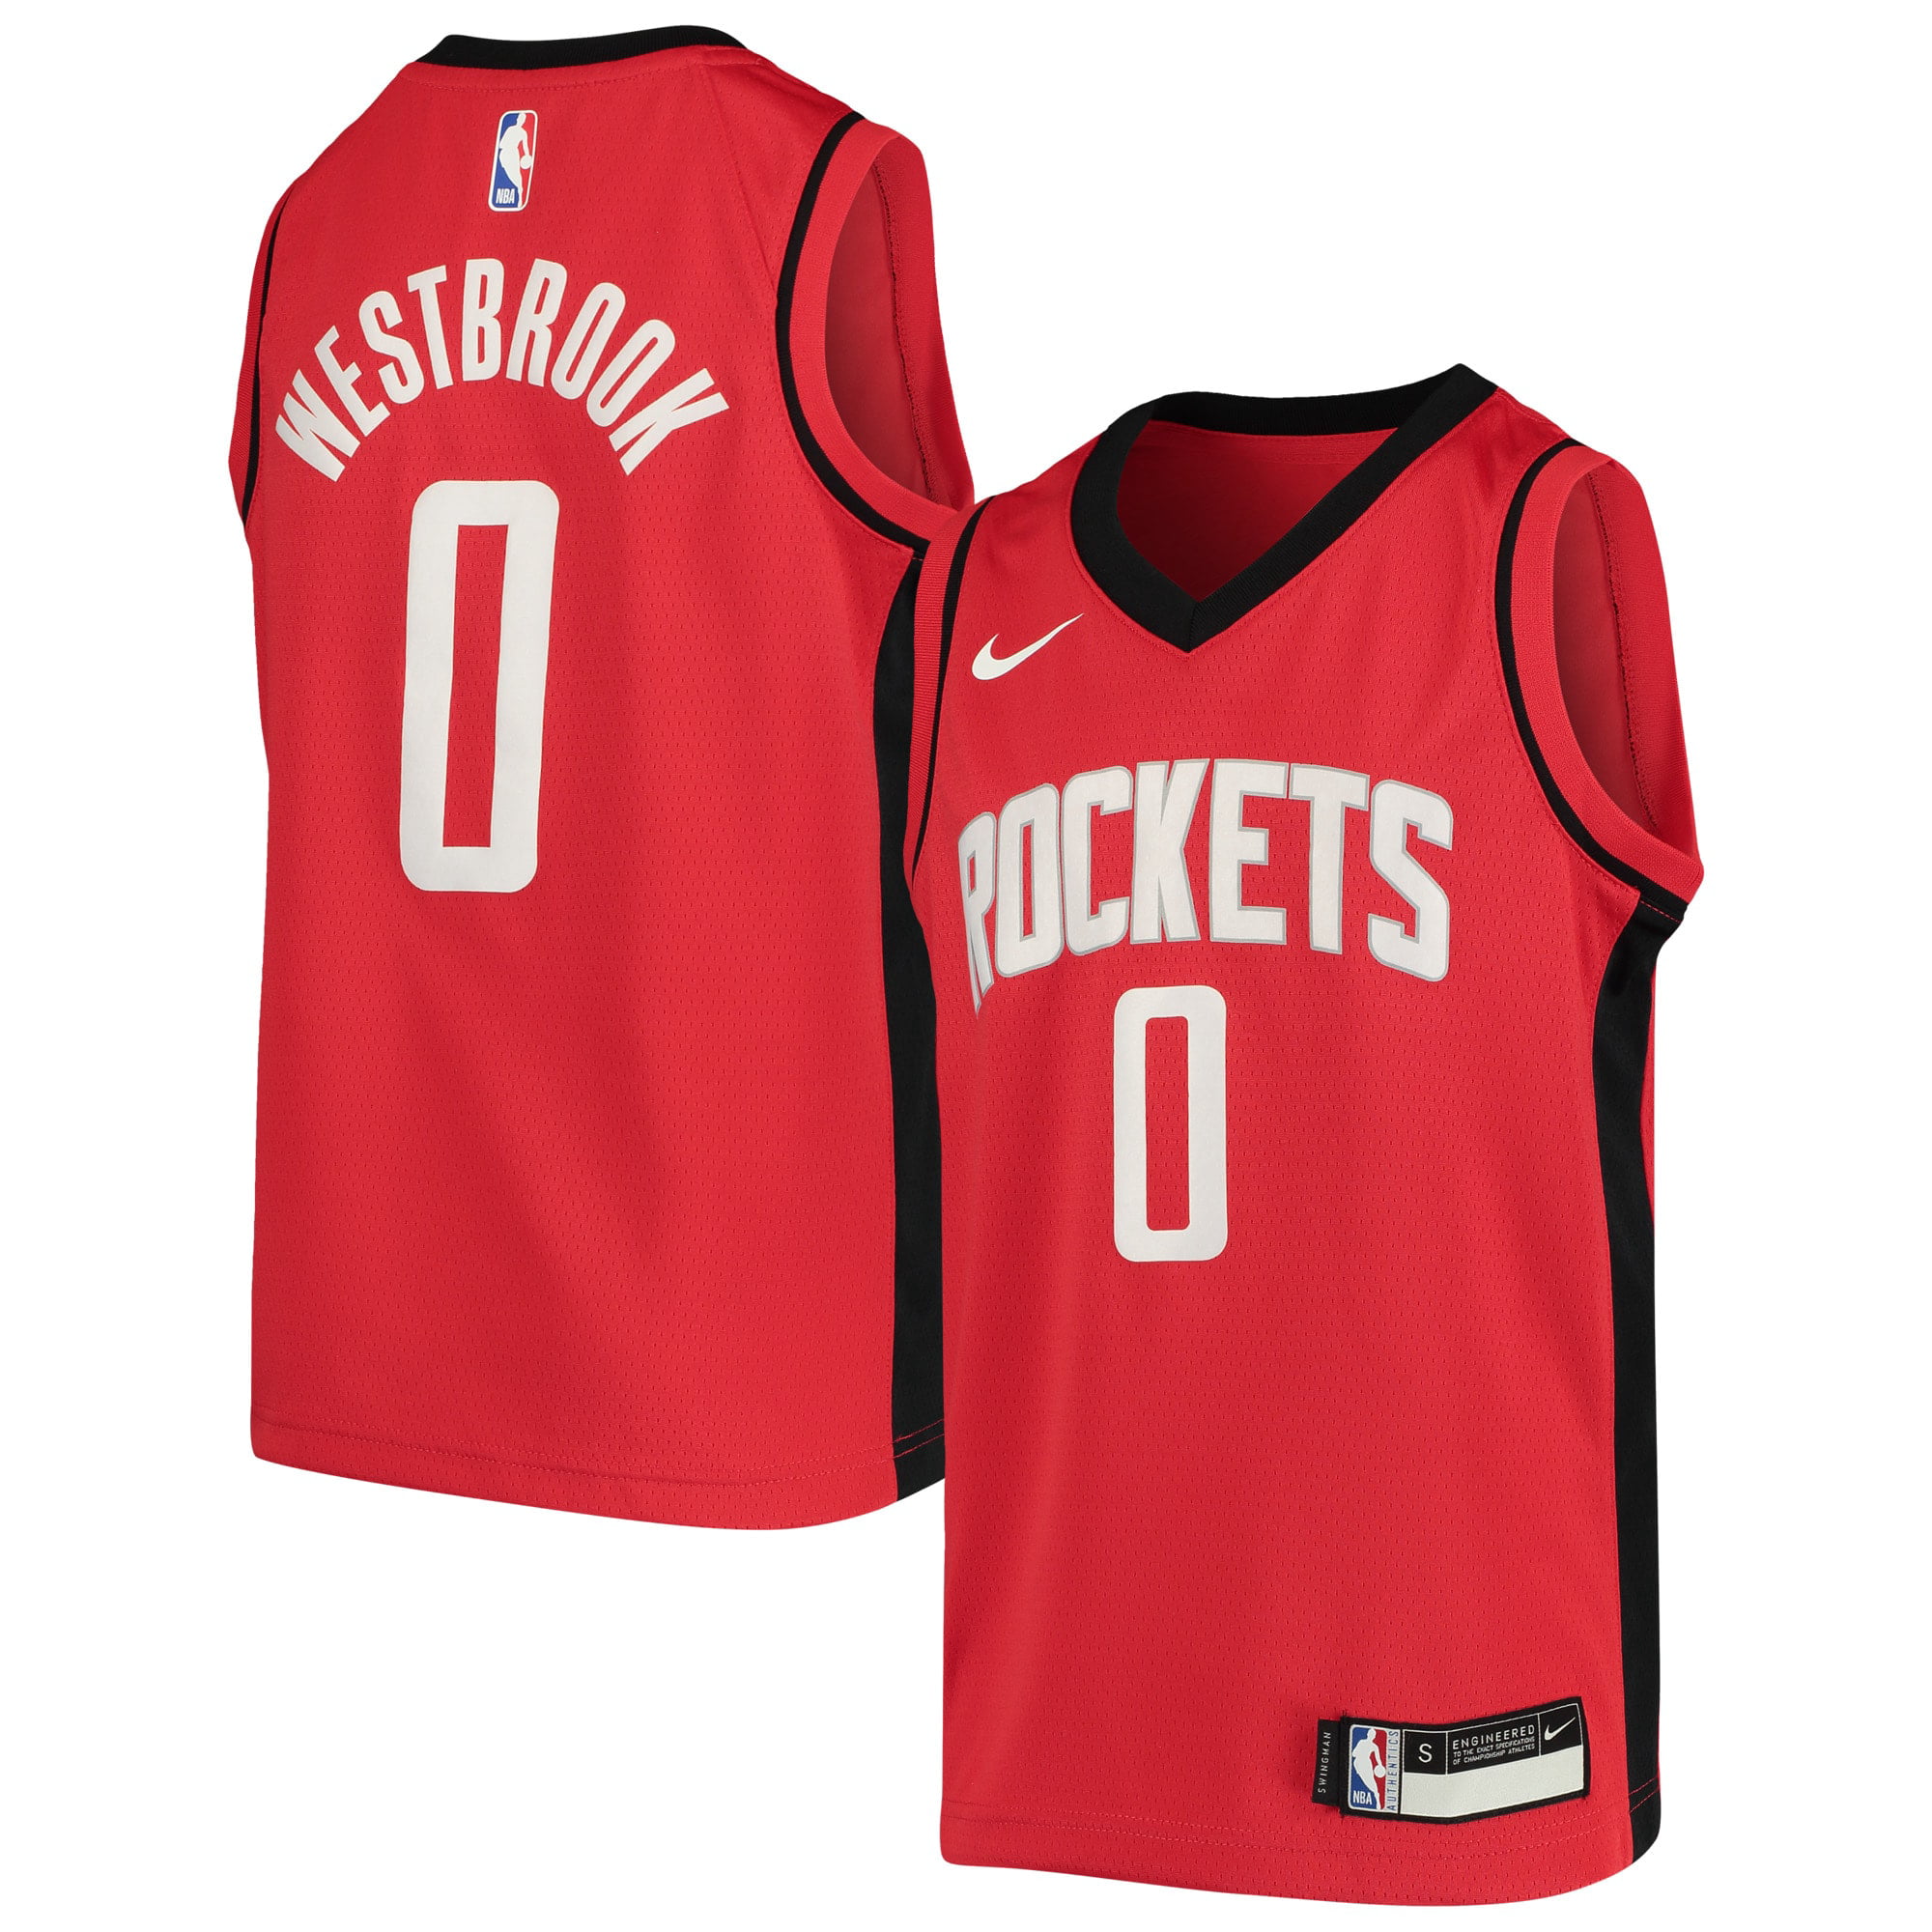 Nike, Shirts, Nike Russell Westbrook Houston Rockets Swingman Jersey  Cw3666657 Nba Red